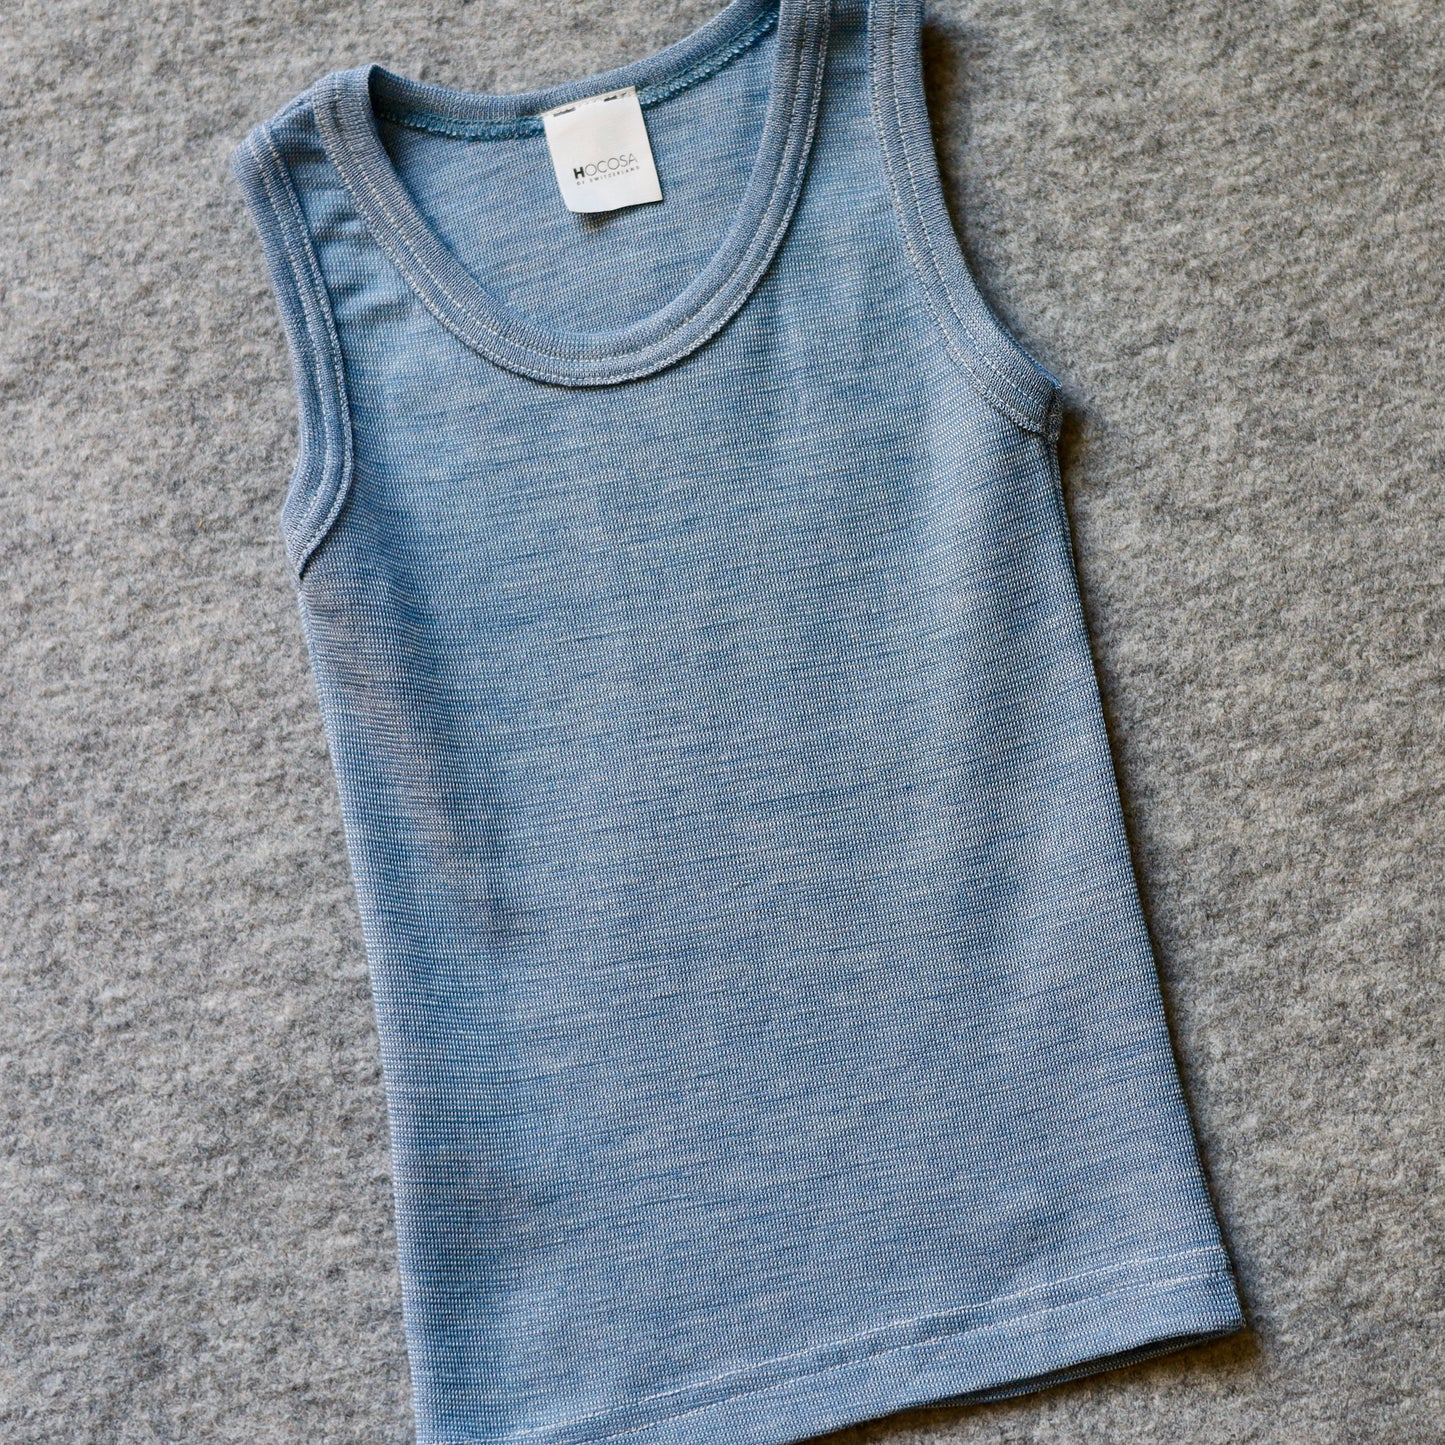 Hocosa Toddler Sleeveless Shirt, Wool/Silk, Blue Jean